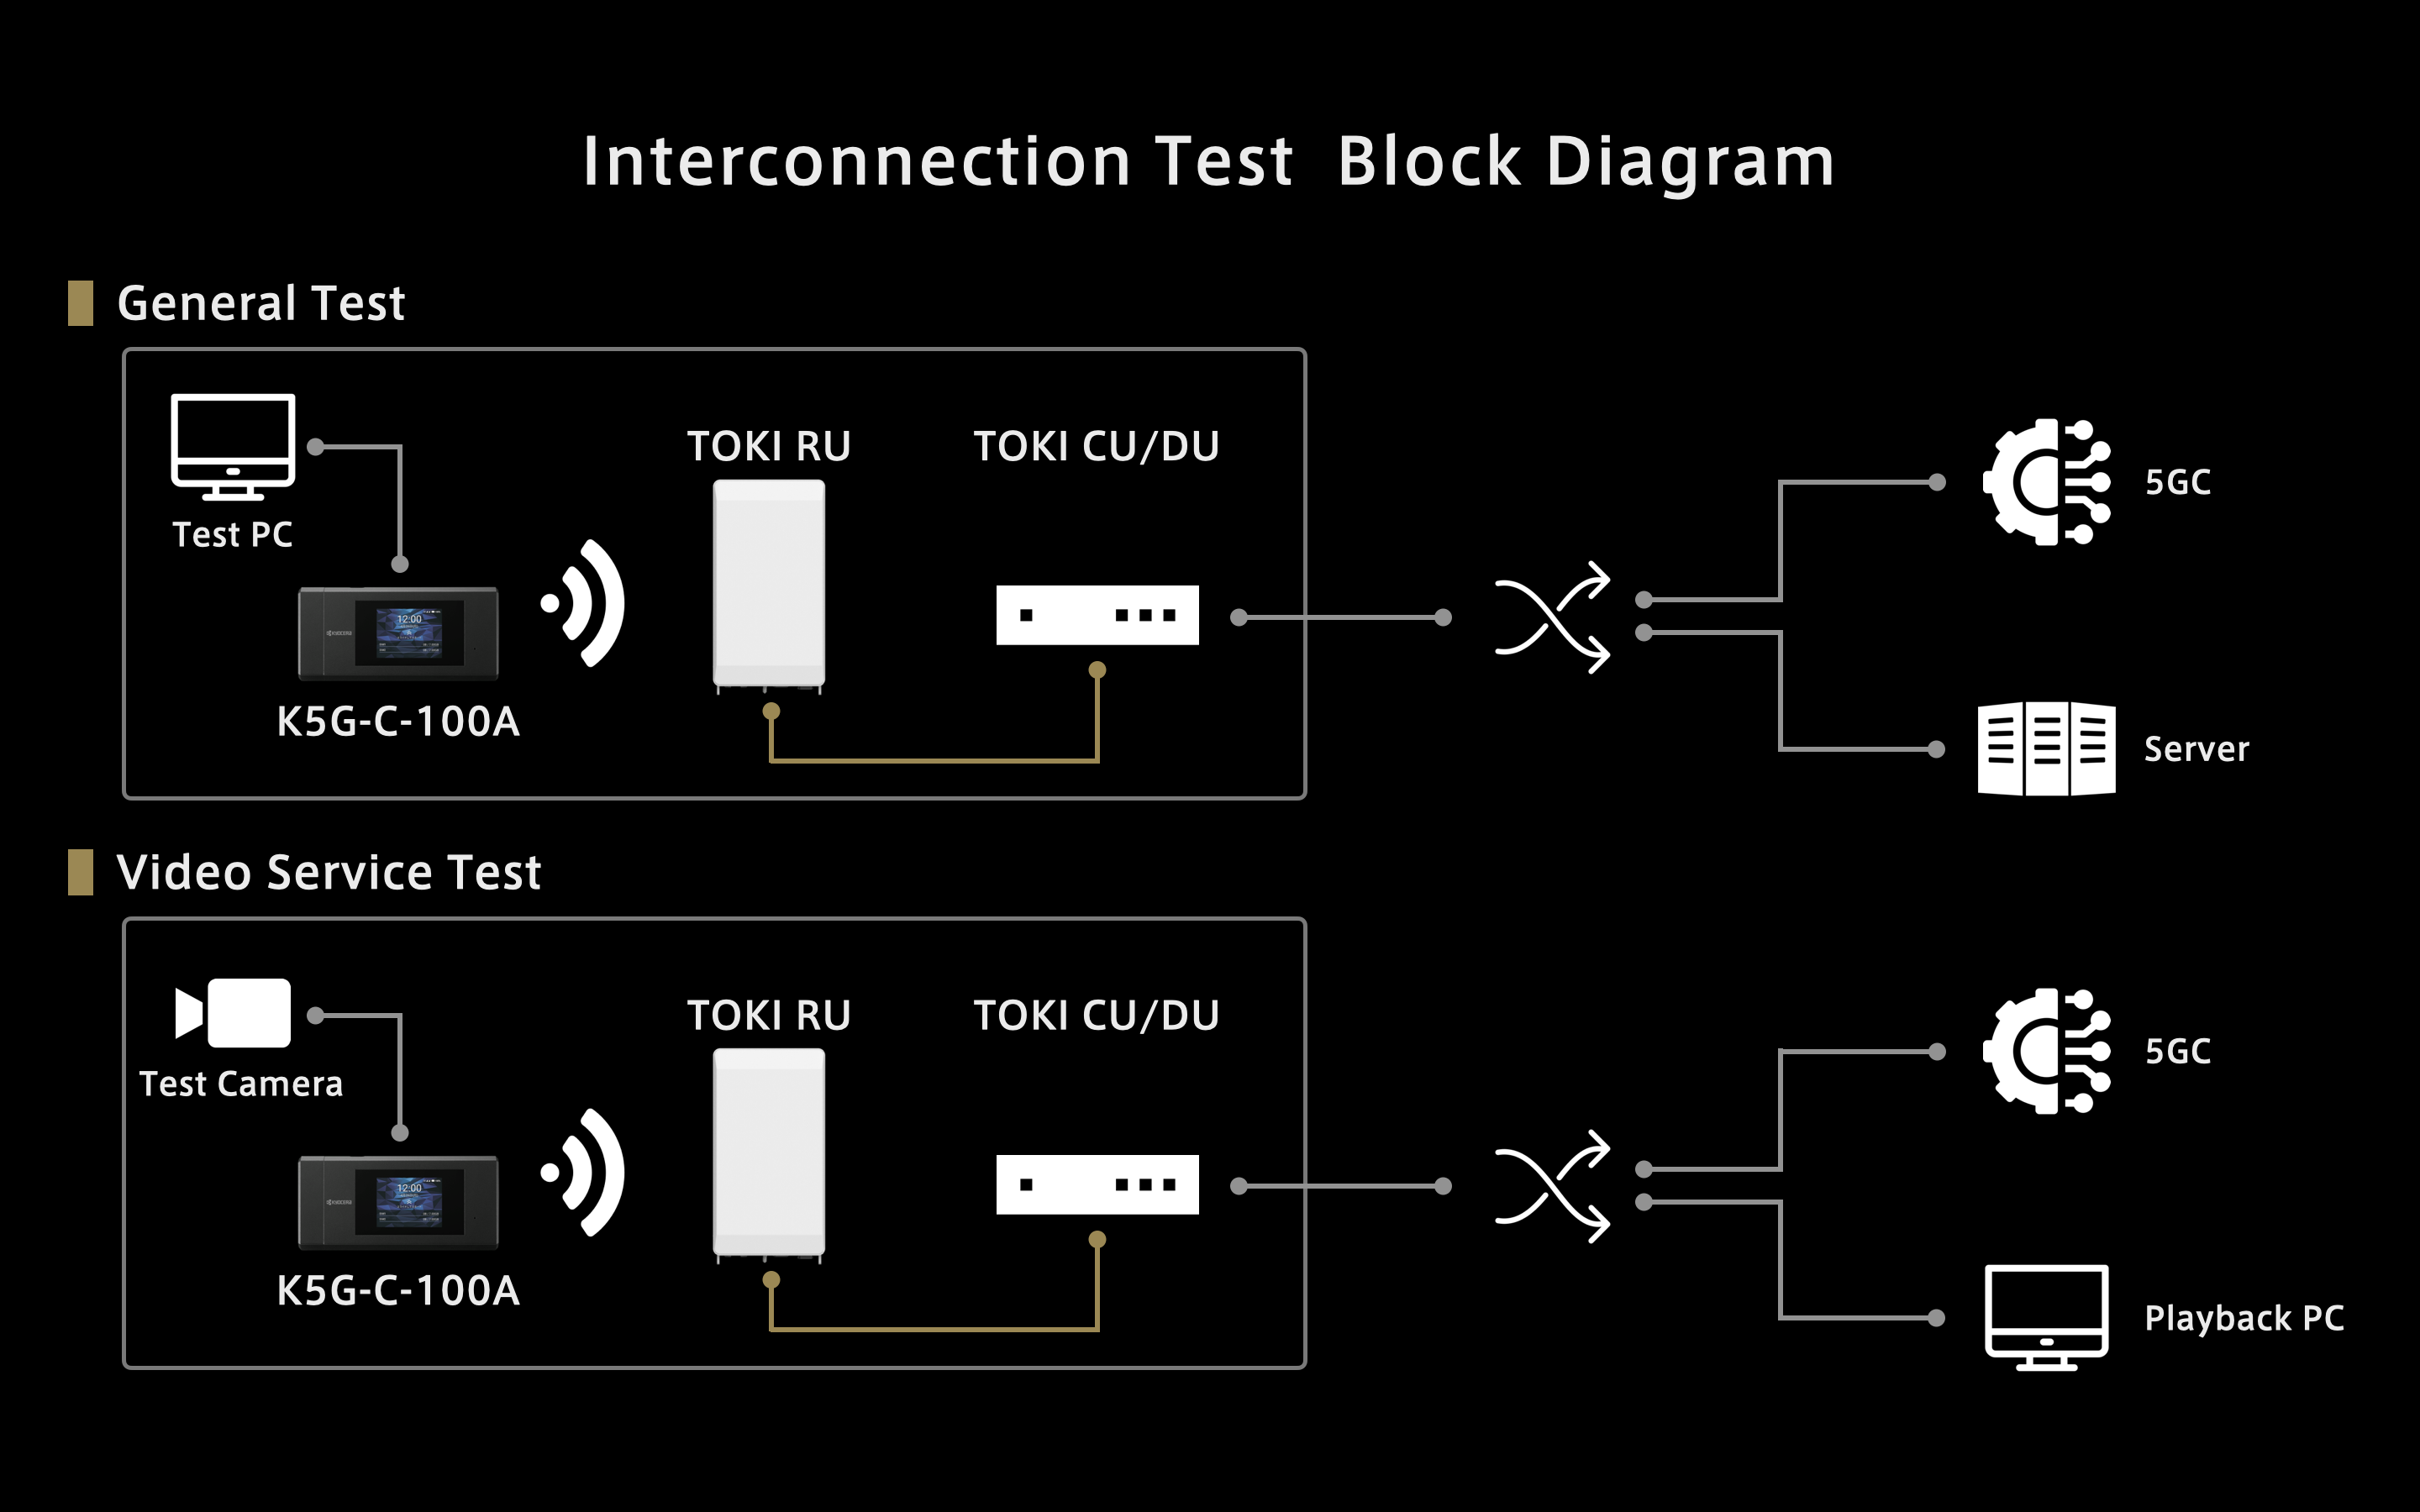 Interconnection Test Block Diagram